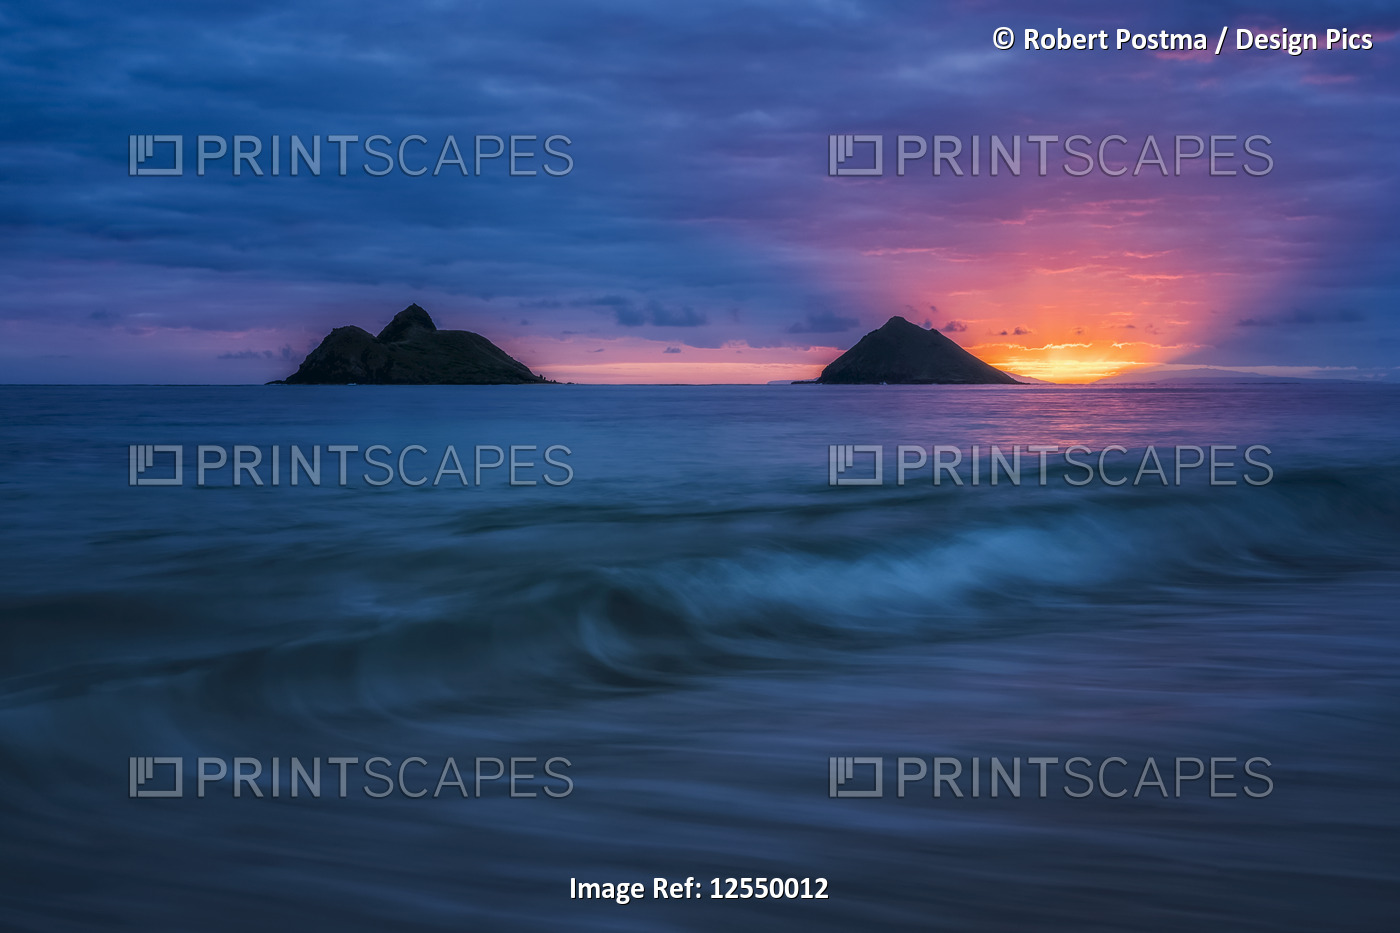 Sunrise over Lanikai Beach; Oahu, Hawaii, United States of America